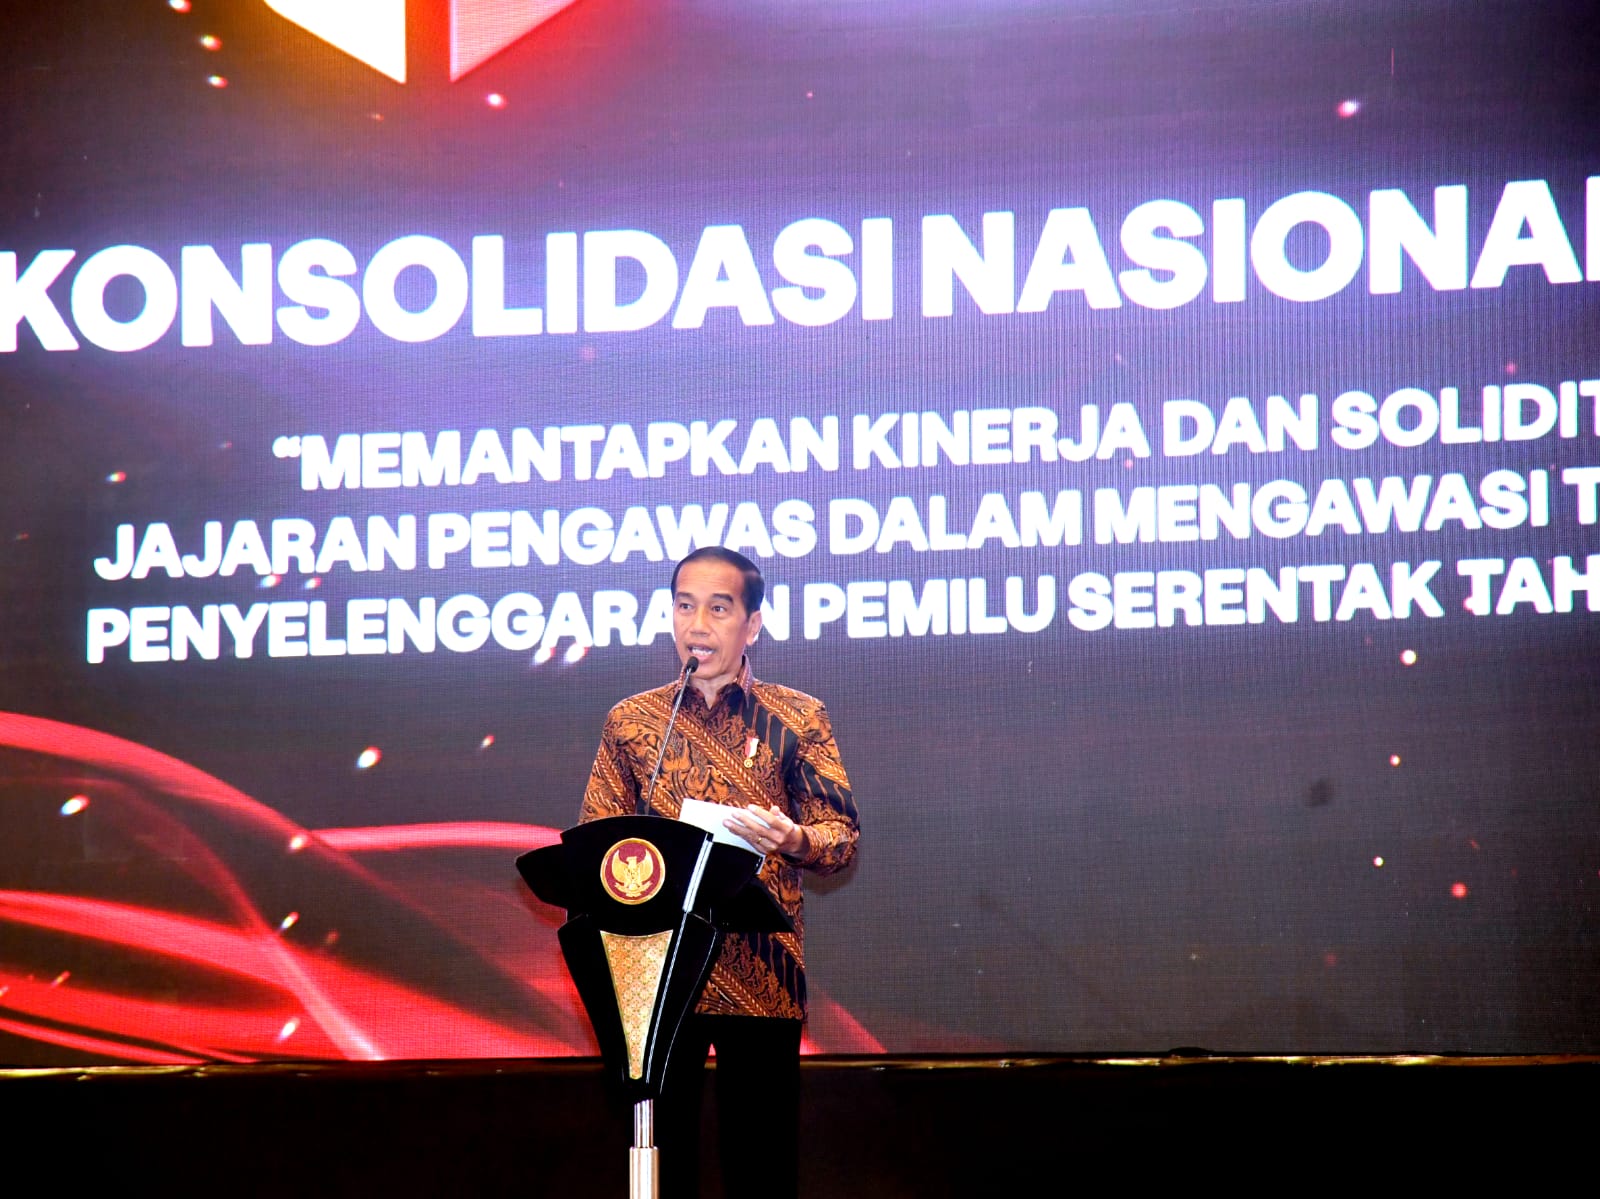 Jokowi Ingatkan Bawaslu Awasi DPT dan Tekankan 4 Poin Ini Agar Pemilu 2024 Jurdil